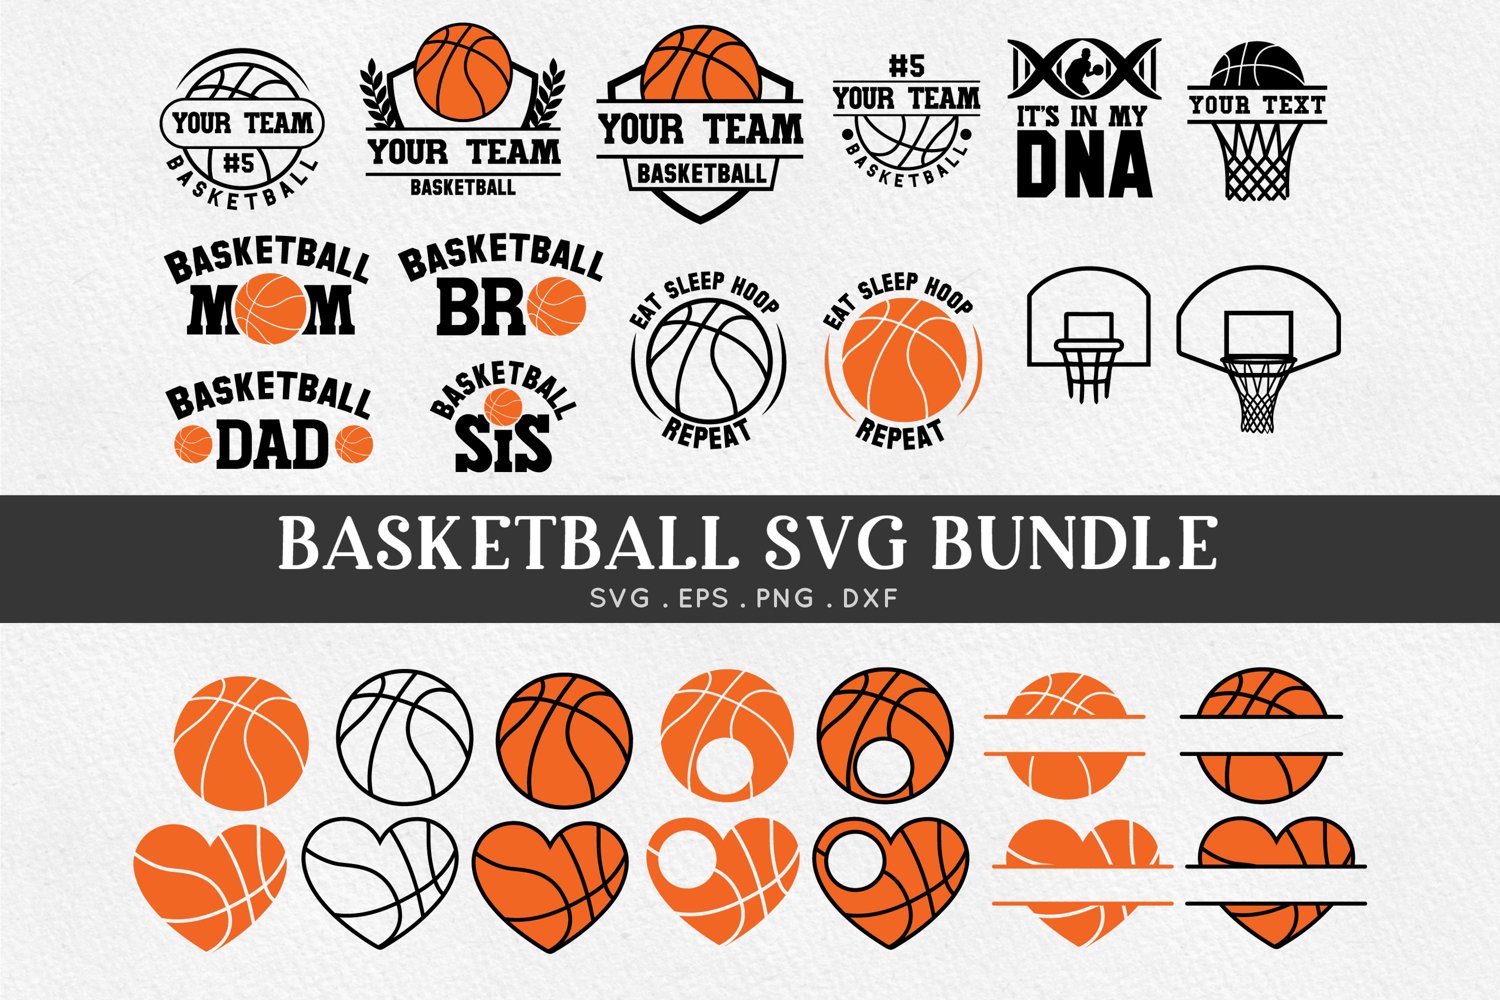 Cover image of Basketball svg bundle.